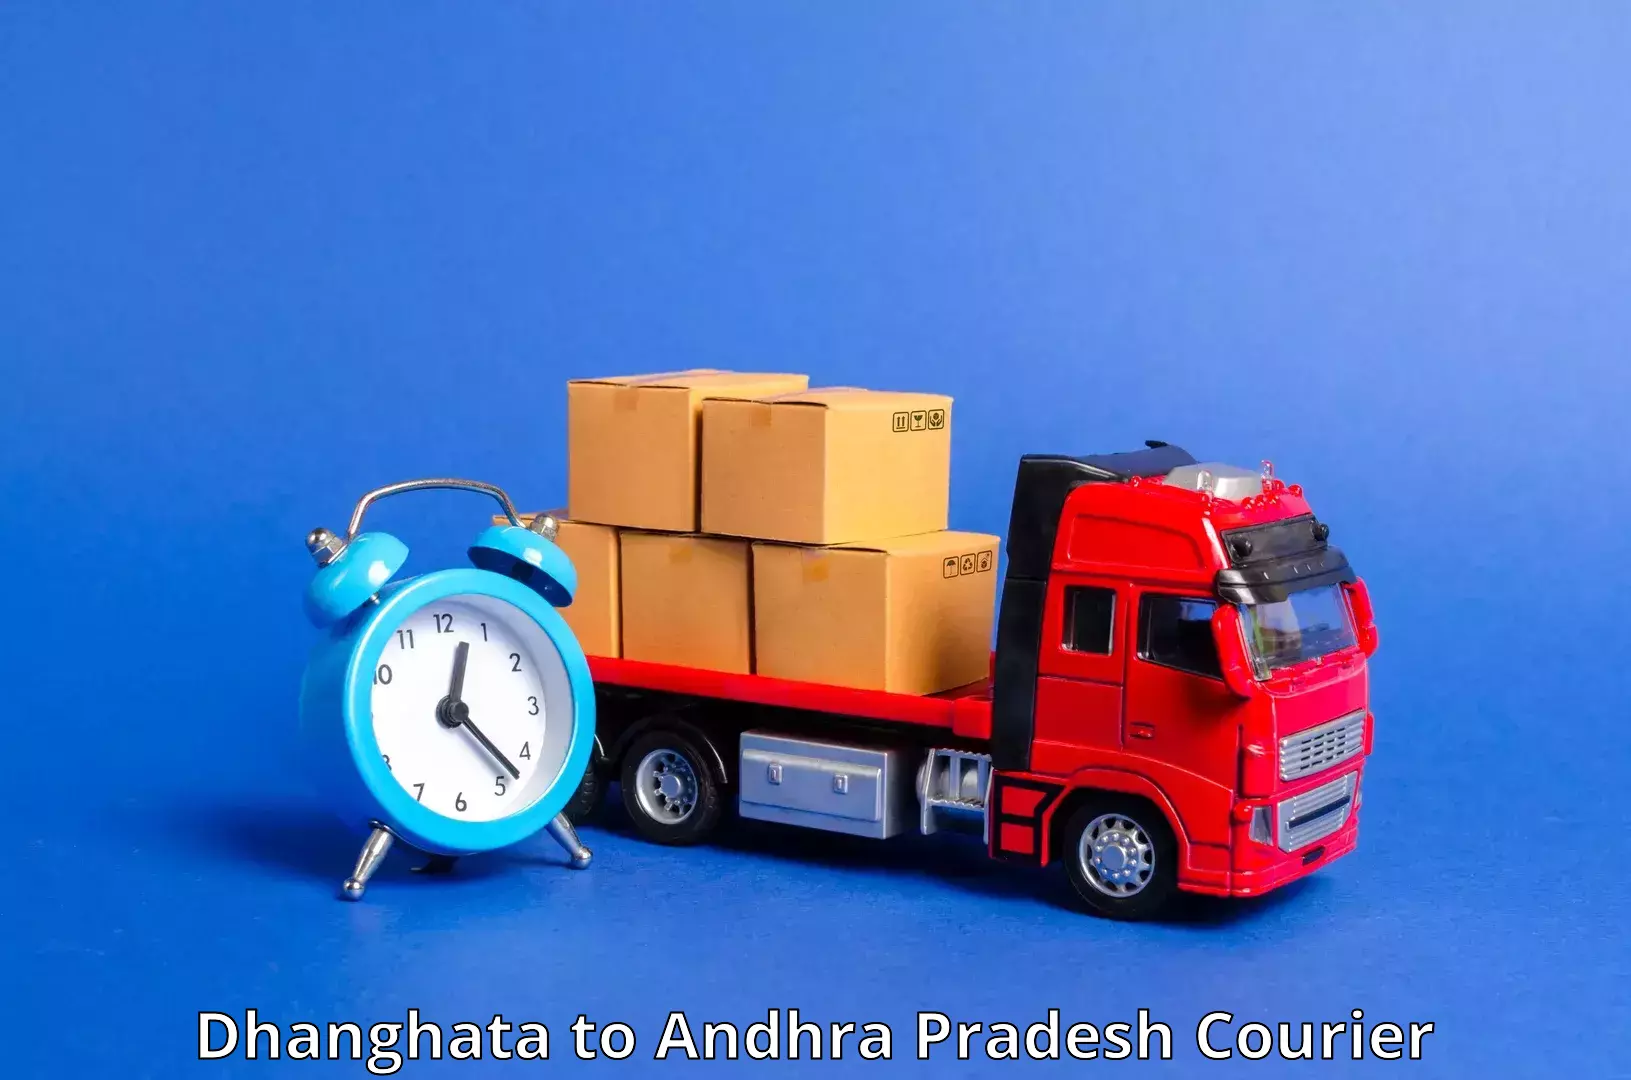 Express logistics service Dhanghata to Draksharamam